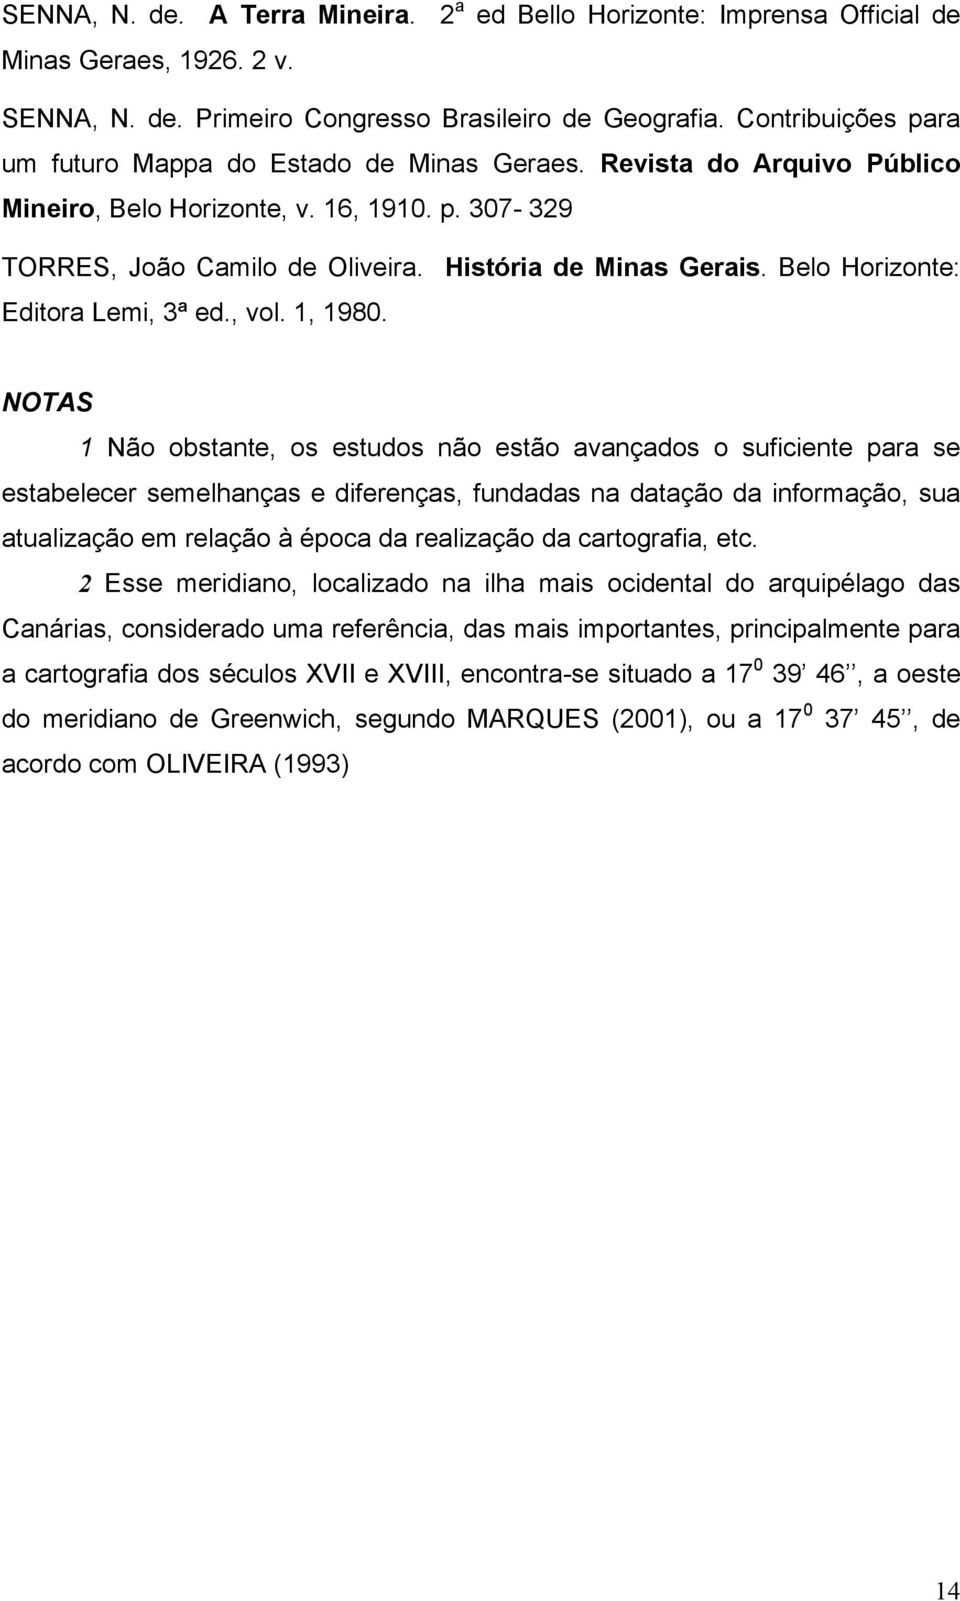 Belo Horizonte: Editora Lemi, 3ª ed., vol. 1, 1980.